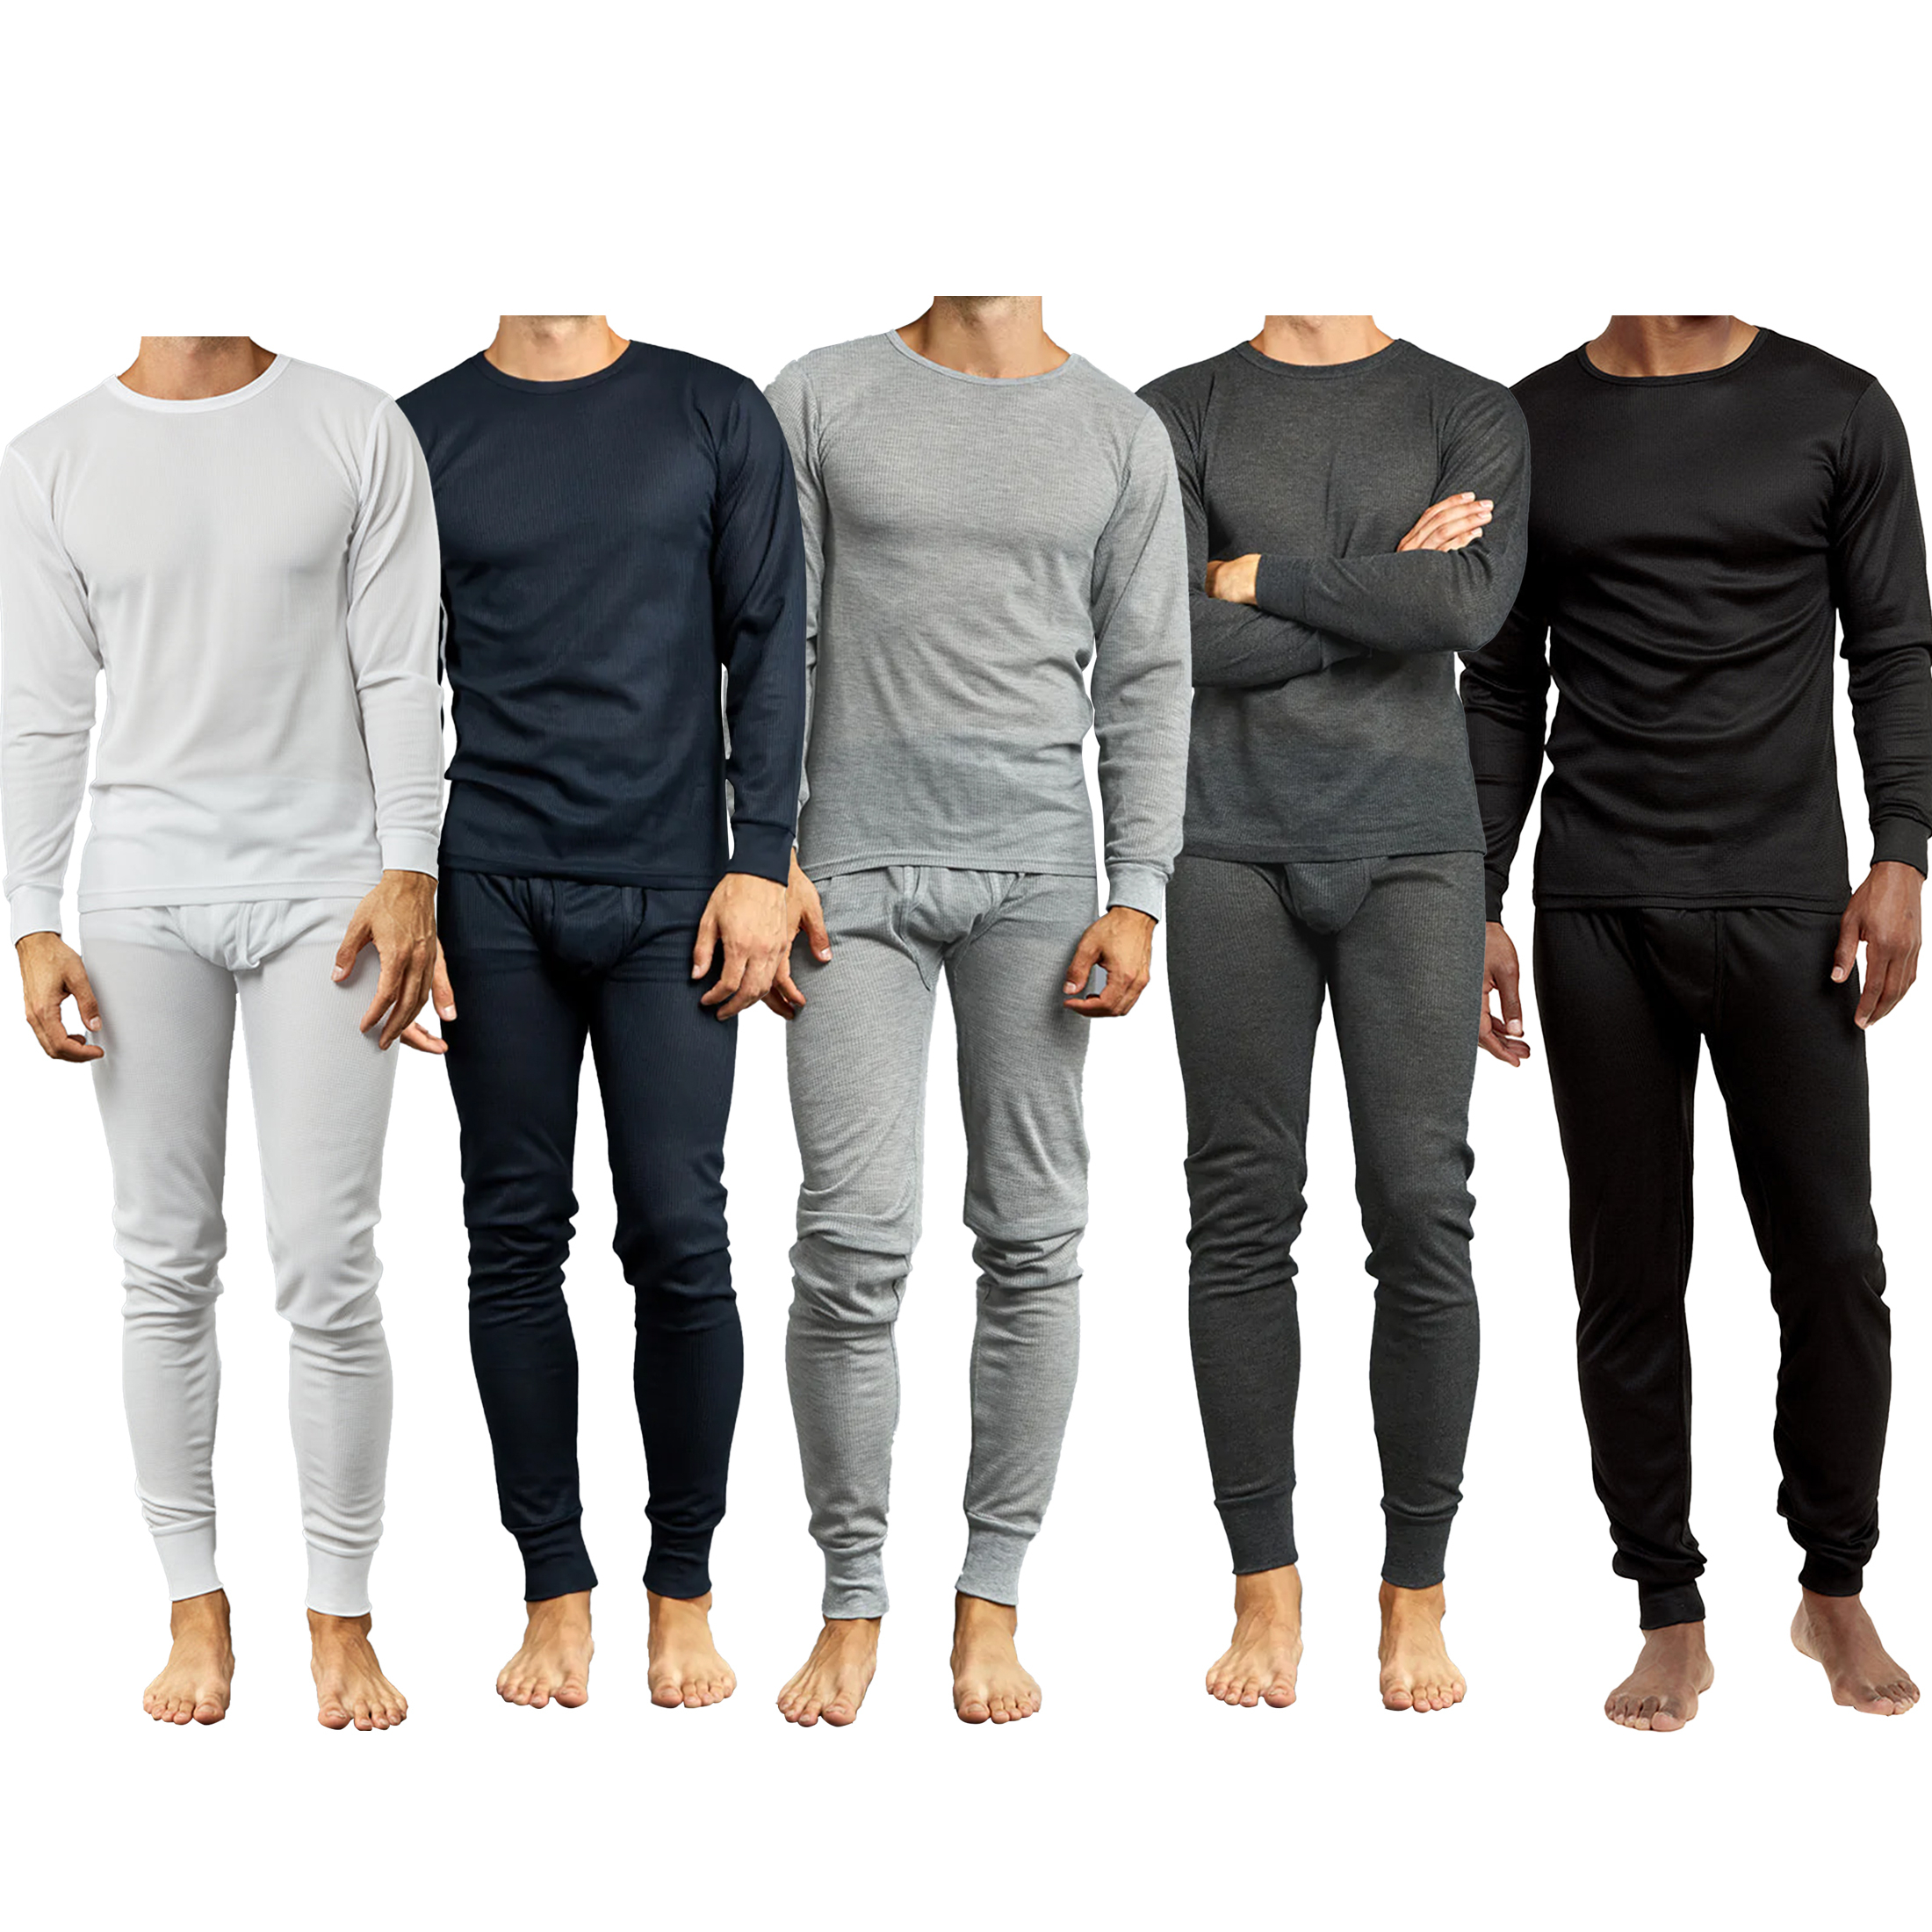 2-Piece: Men's Moisture Wicking Long Johns Base Layer Thermal Underwear Set (Top & Bottom) - White, Small